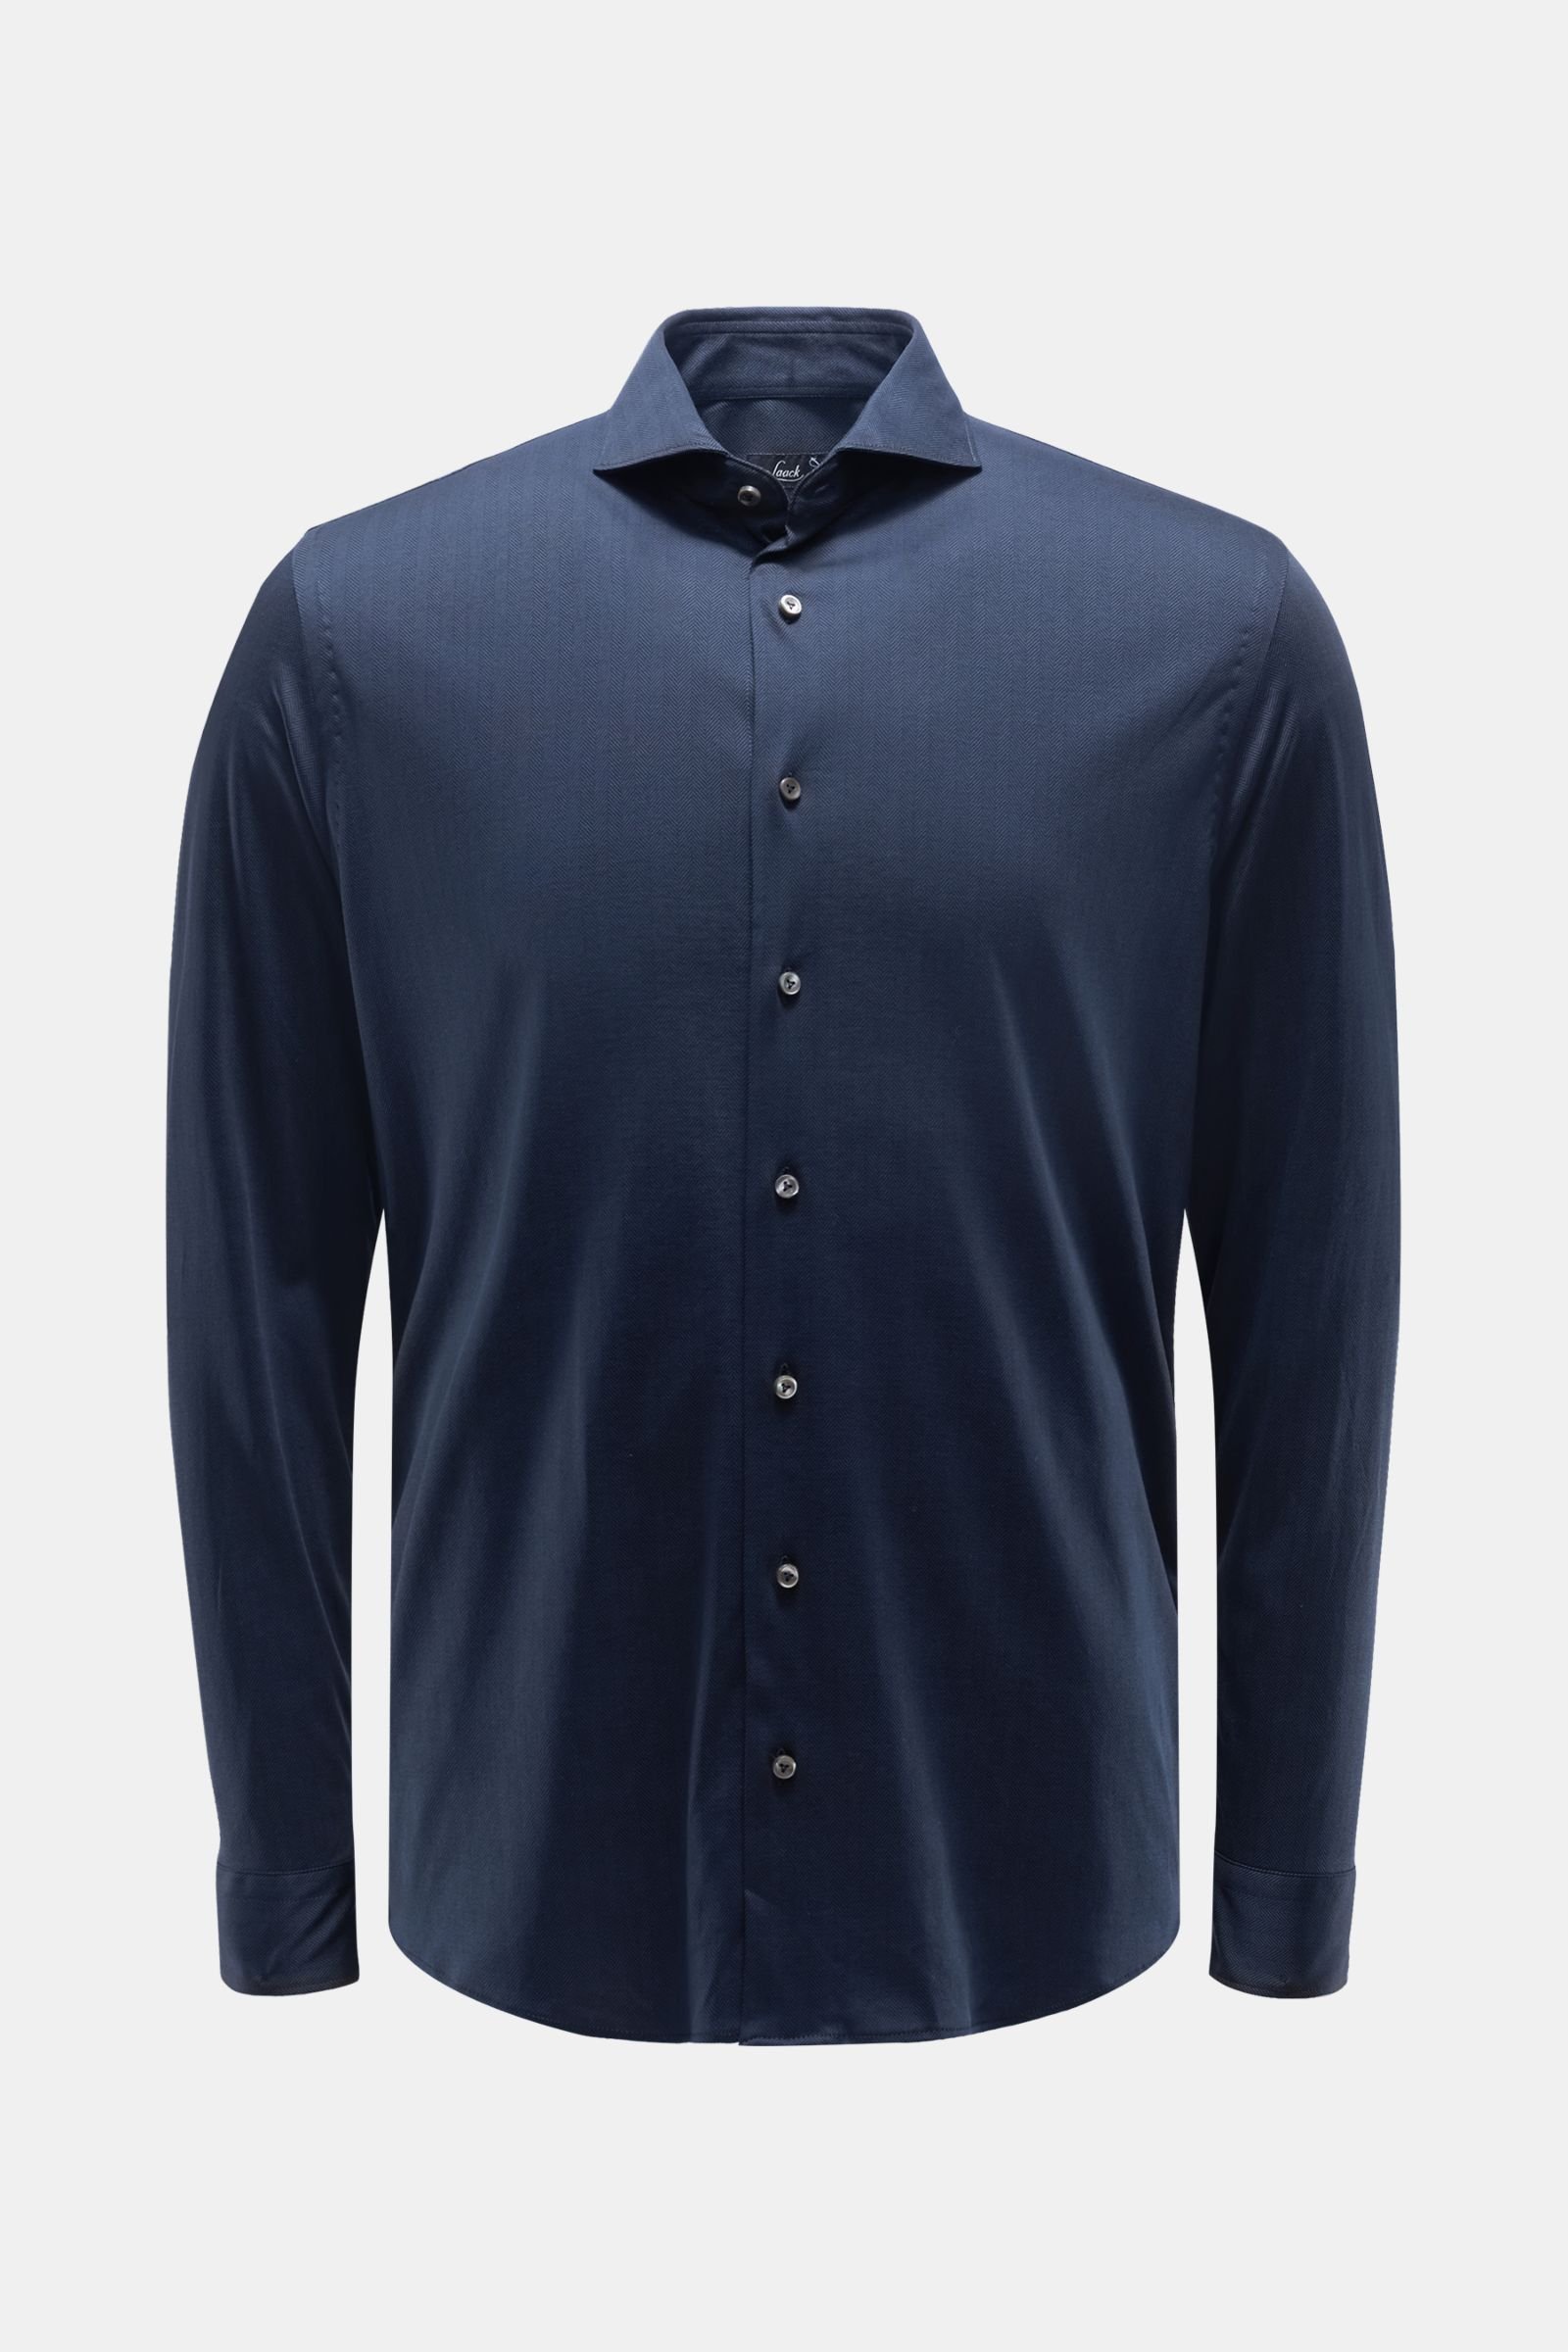 Jersey shirt shark collar 'M-Per-L' navy patterned